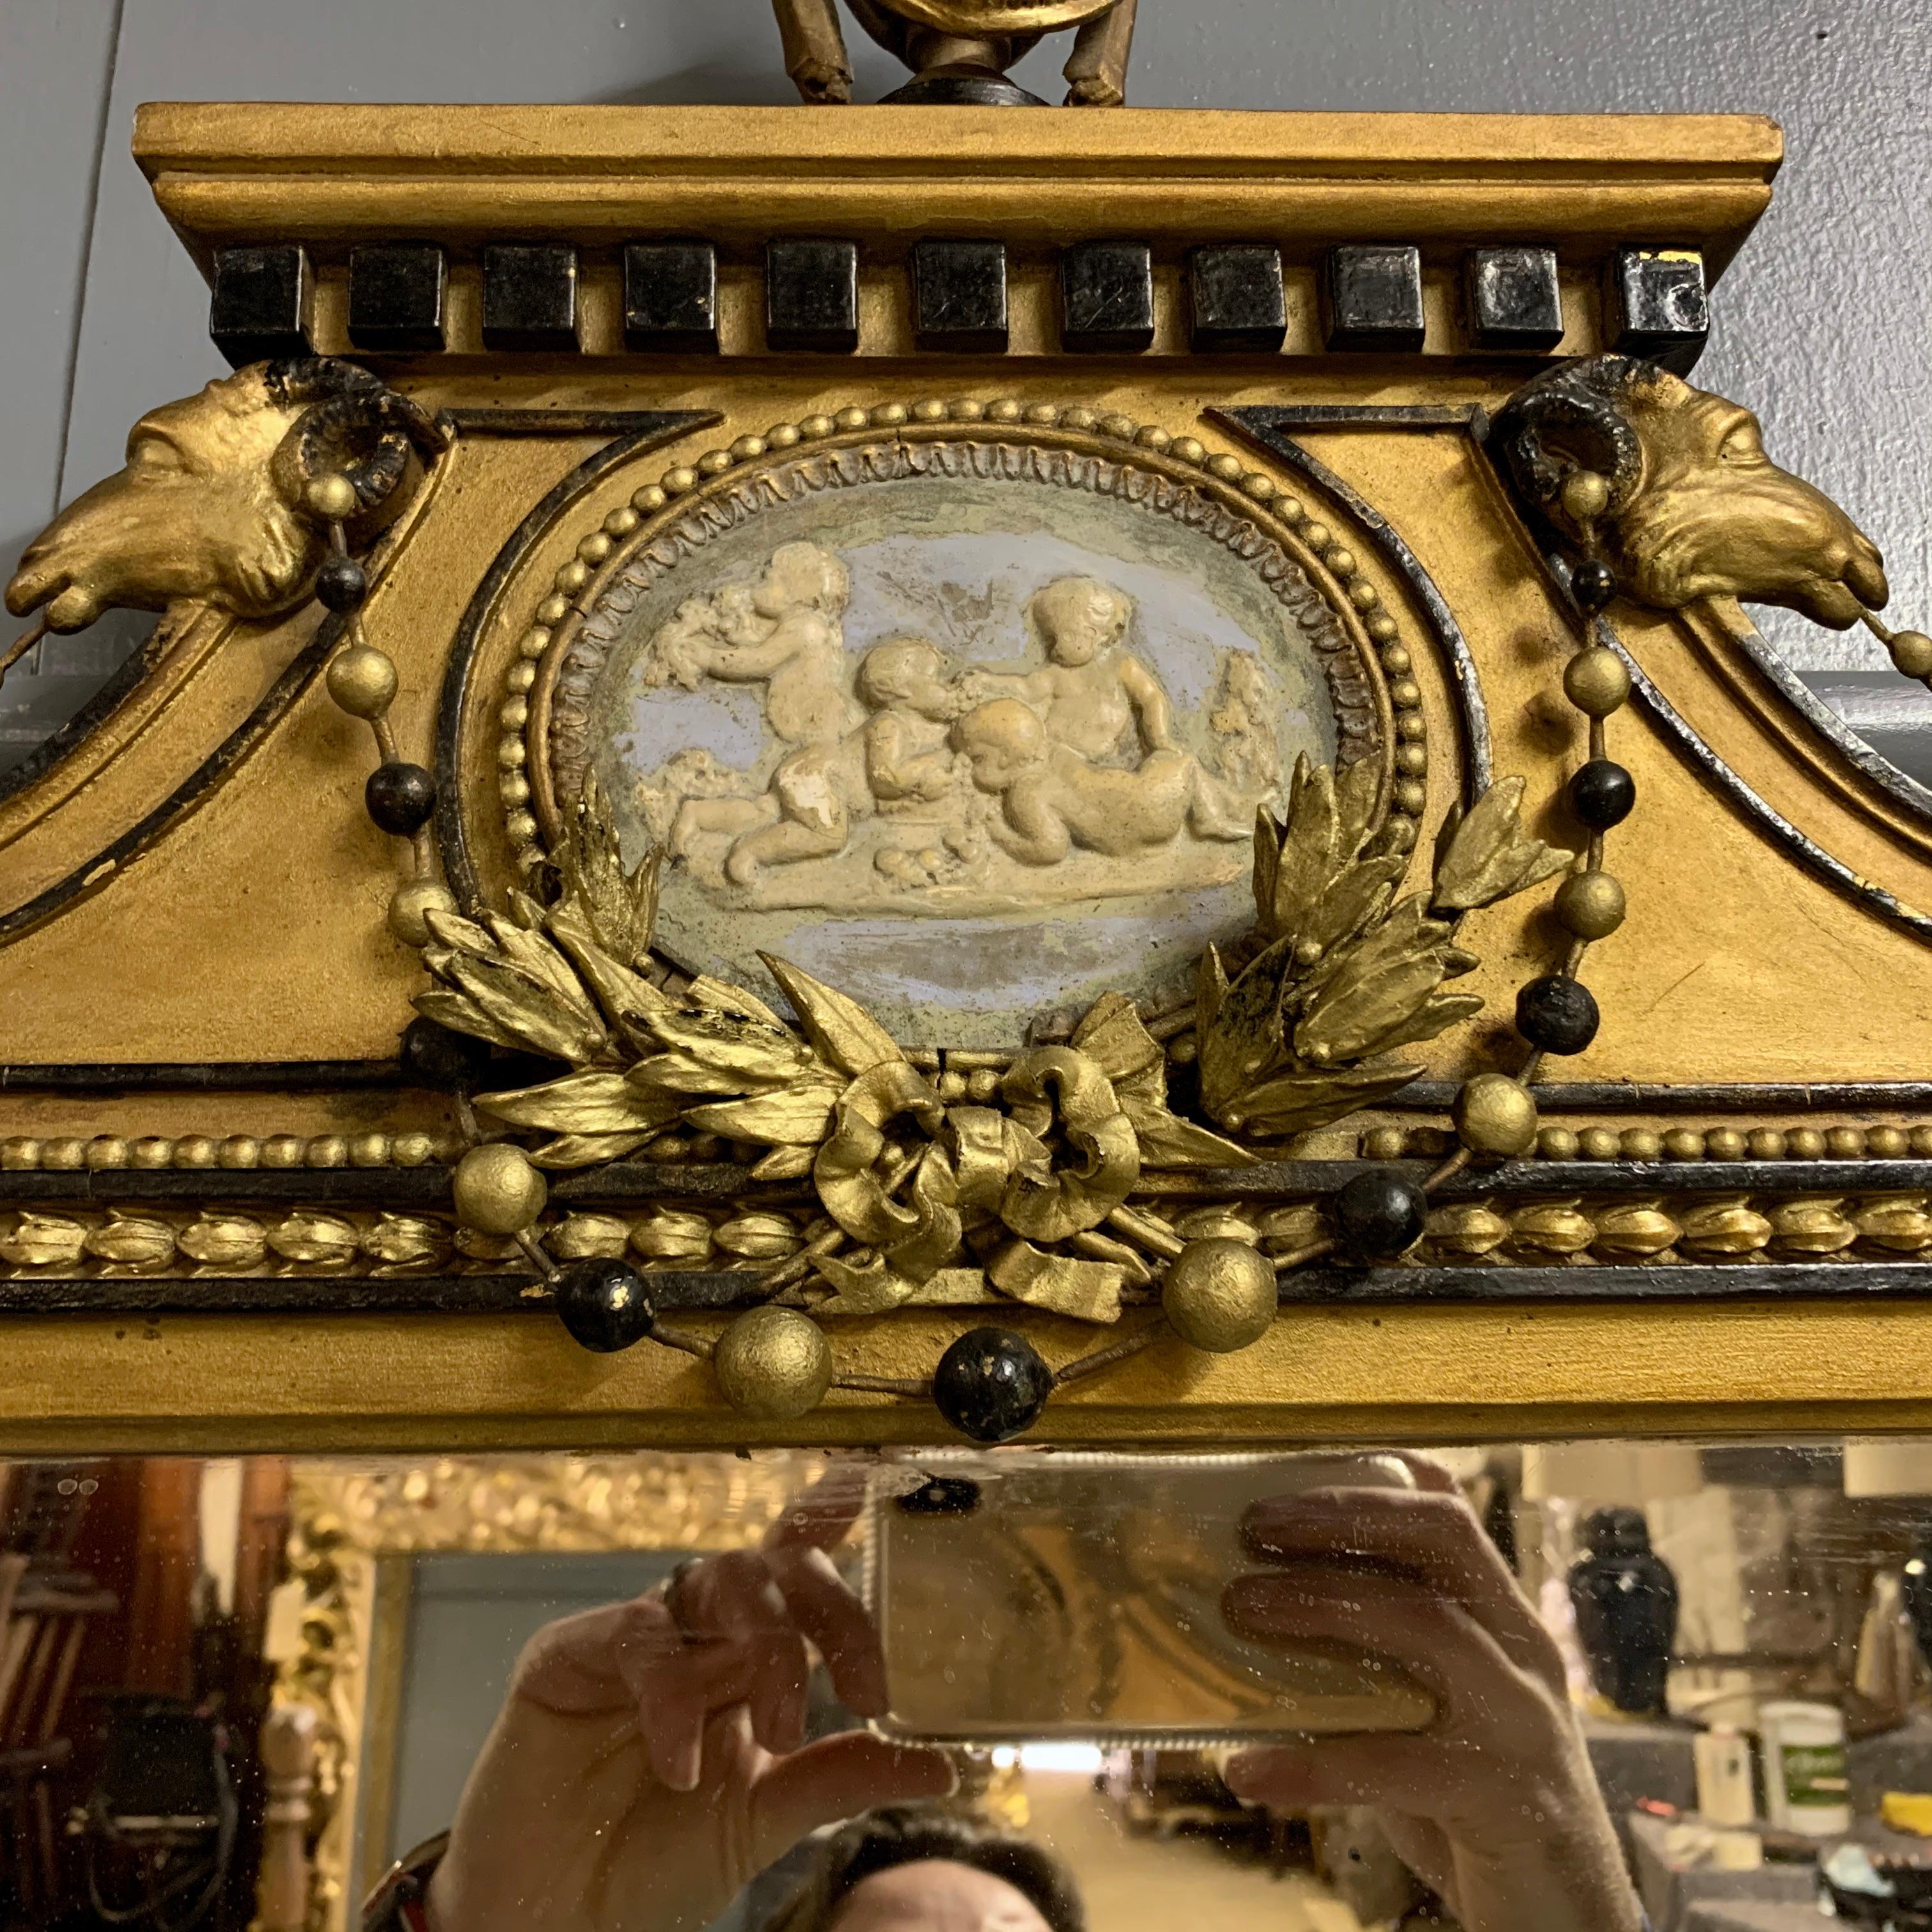 Regency Early 19th Century English Gilt Pier Mirror with Original Mirror Glass